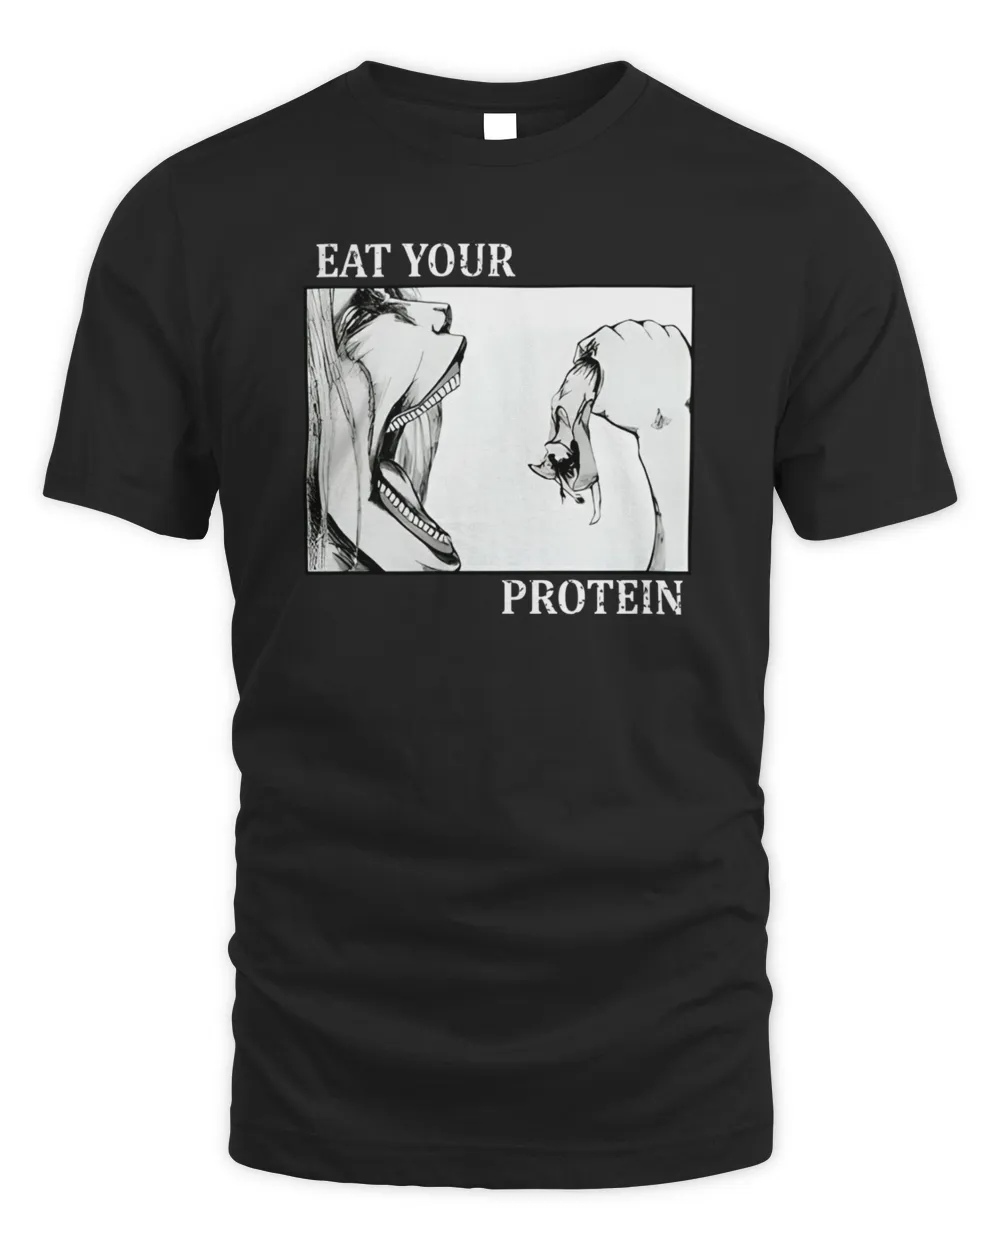 Protein!! Cole - reality vs anime : r/LaBrantFamSnark